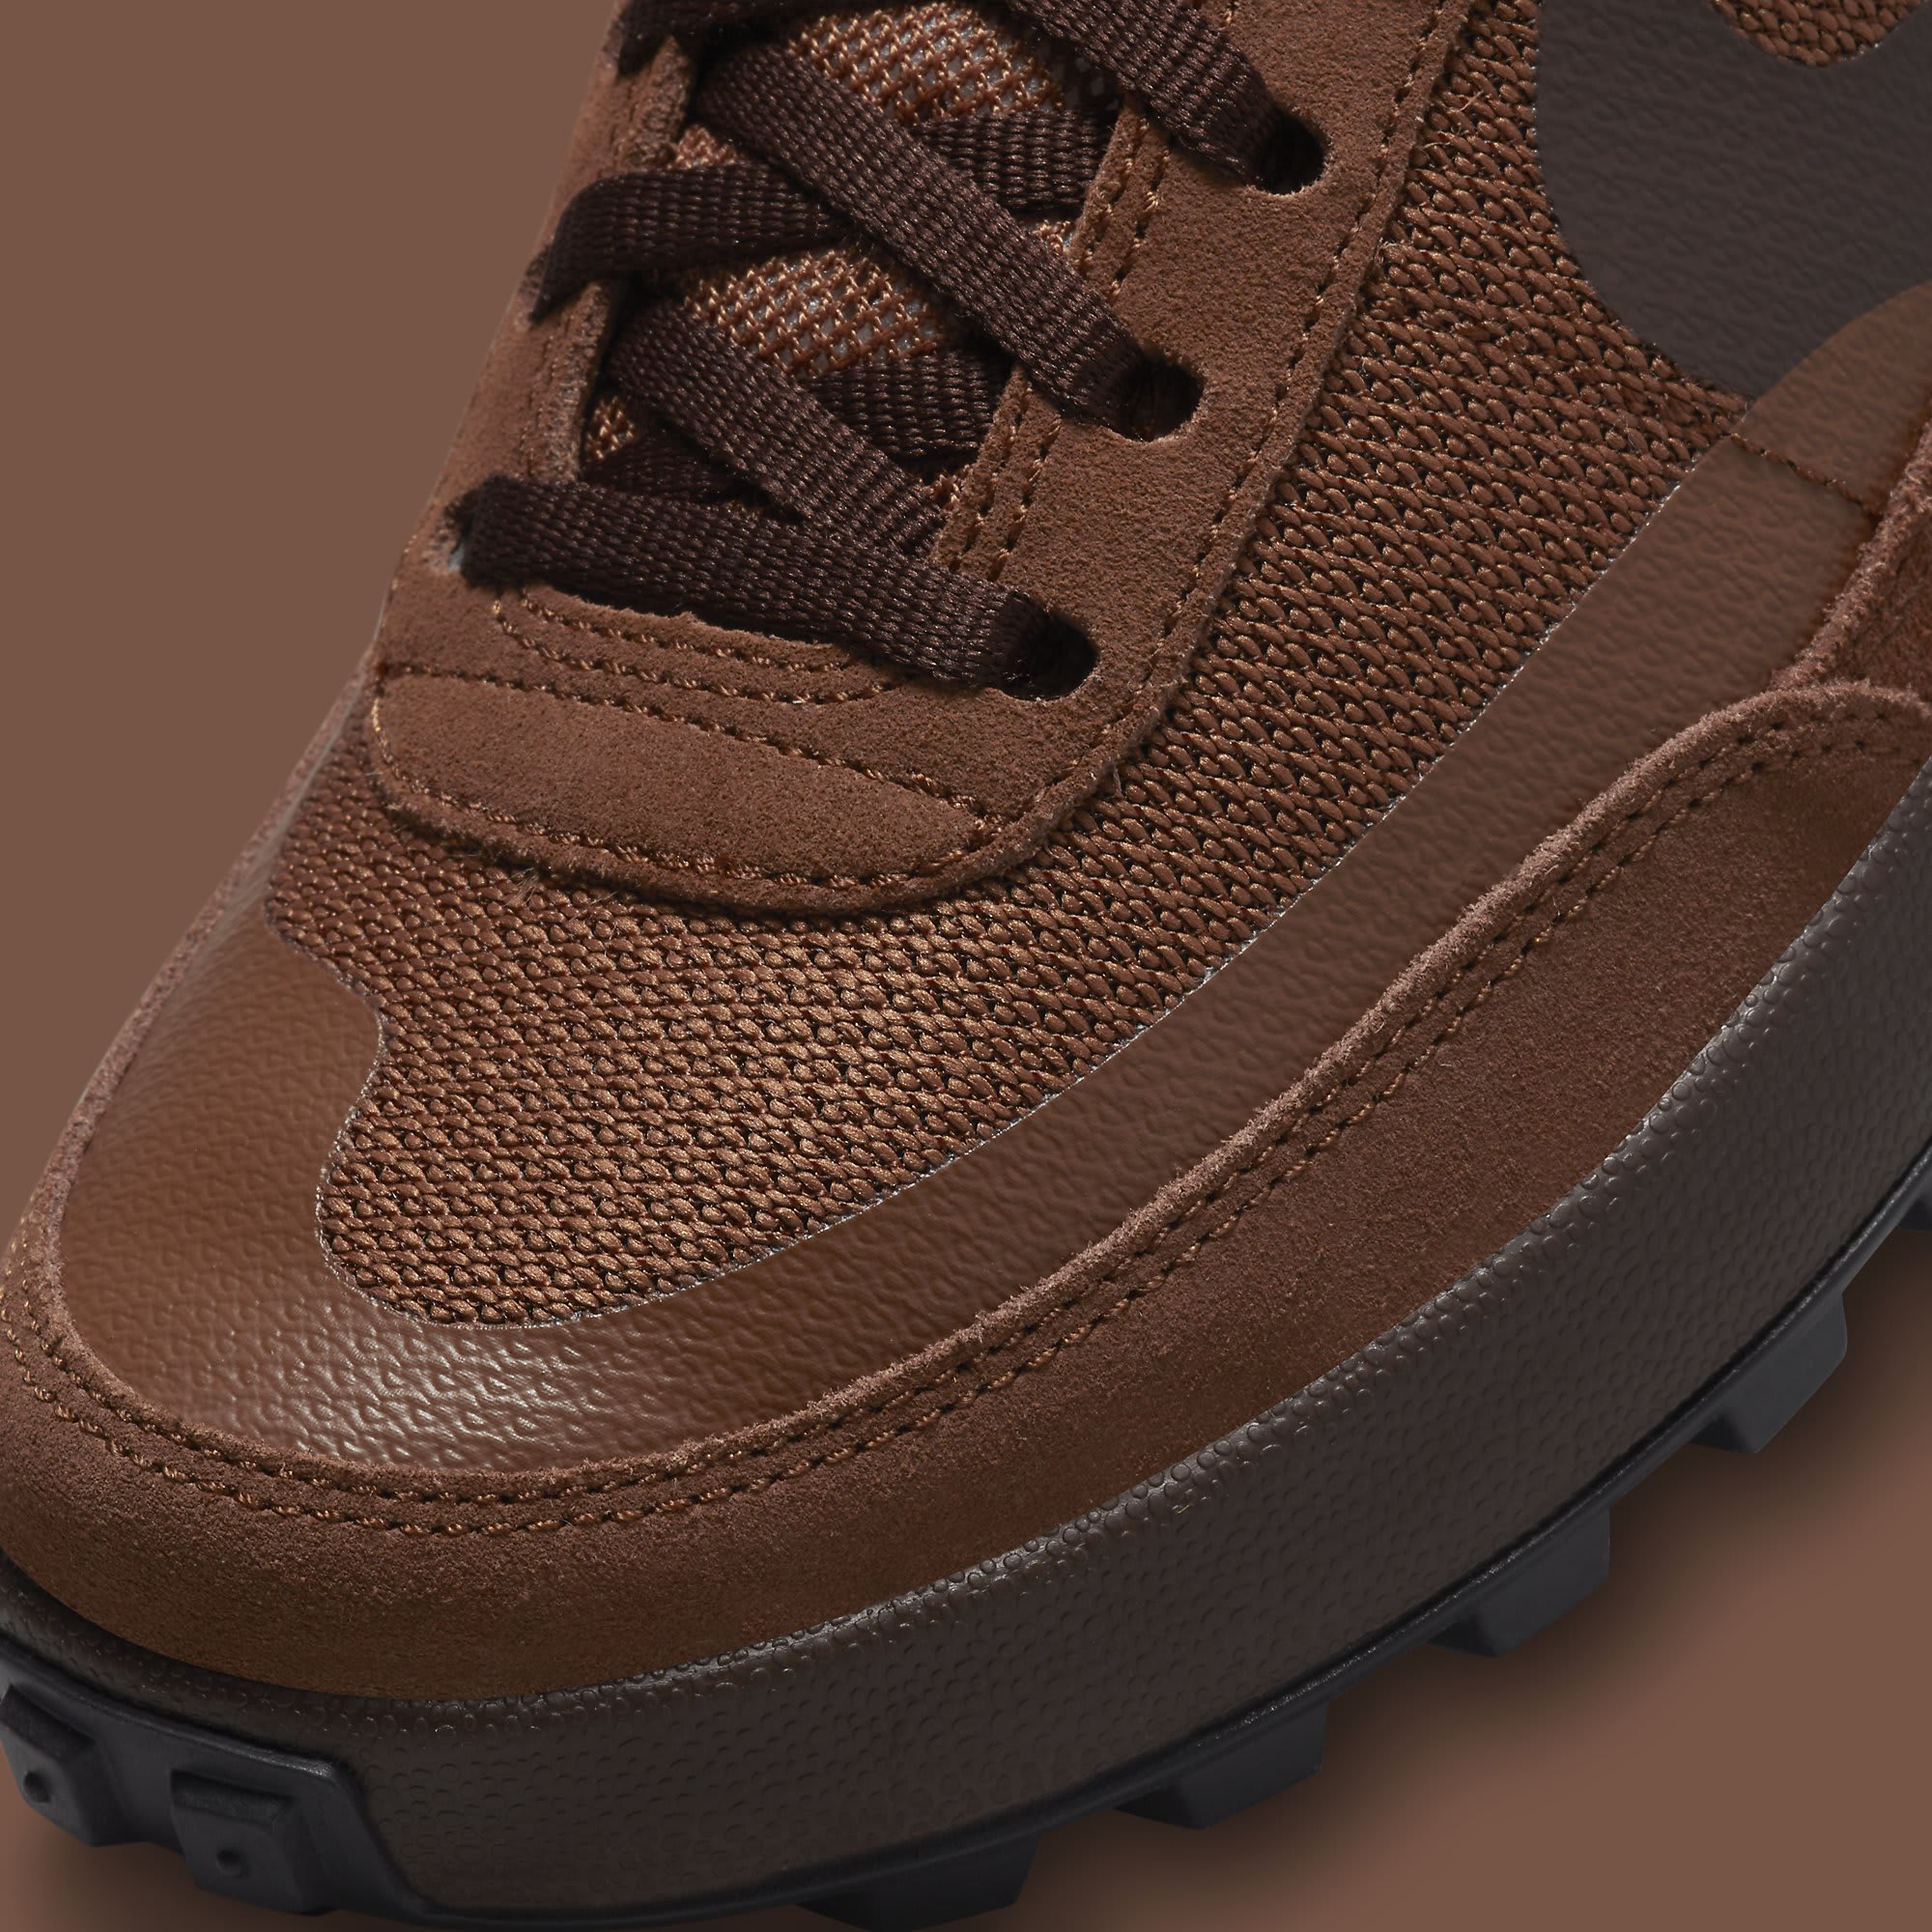 Tom Sachs x Nike General Purpose Shoe GPS Field Brown Release Date DA6671-201 Toe Detail